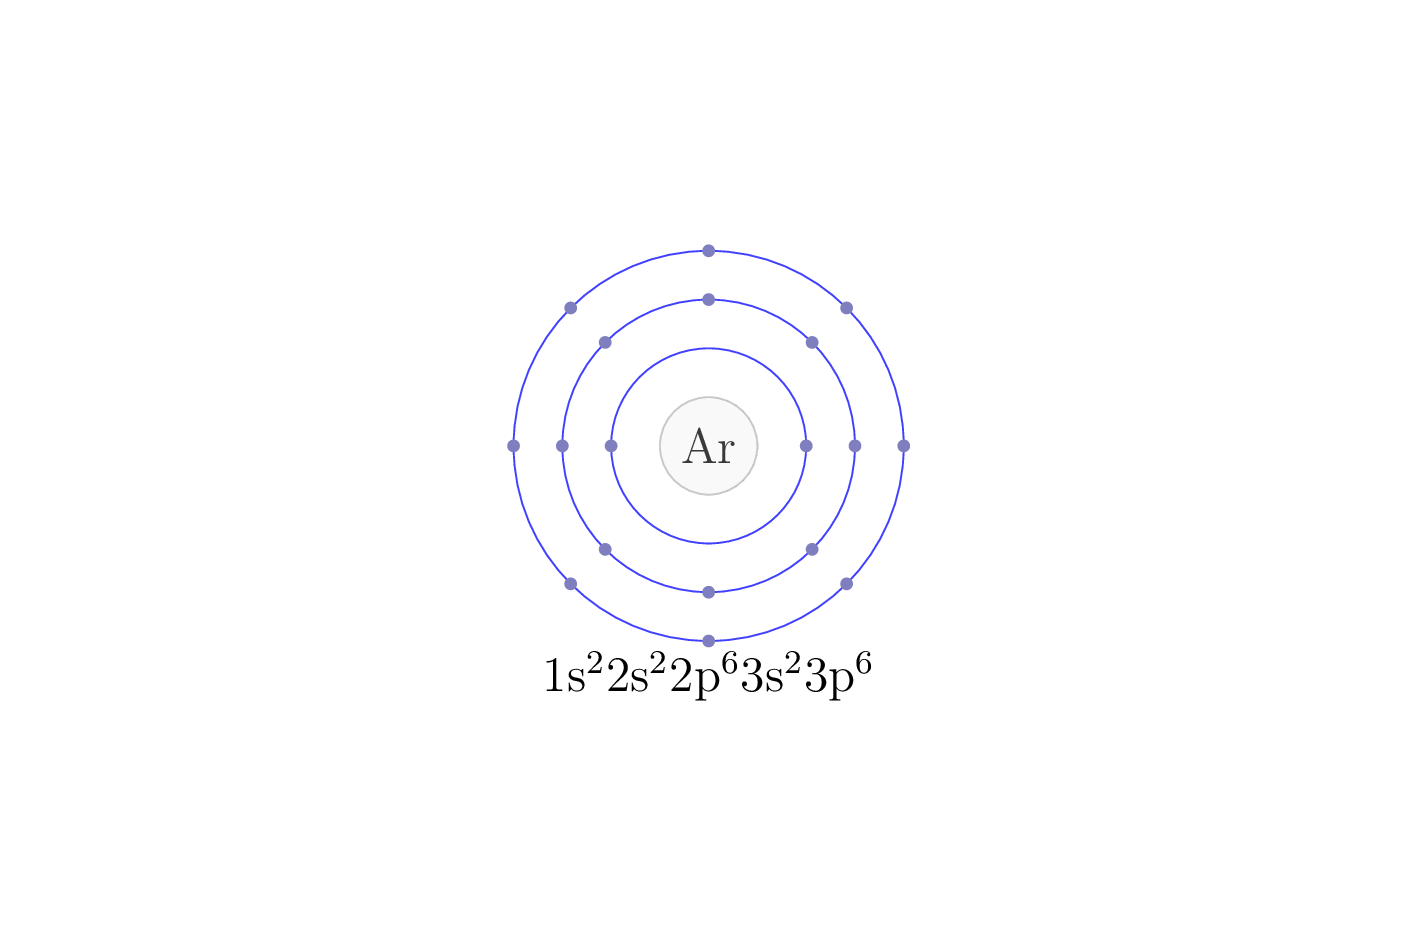 electron configuration of element Ar